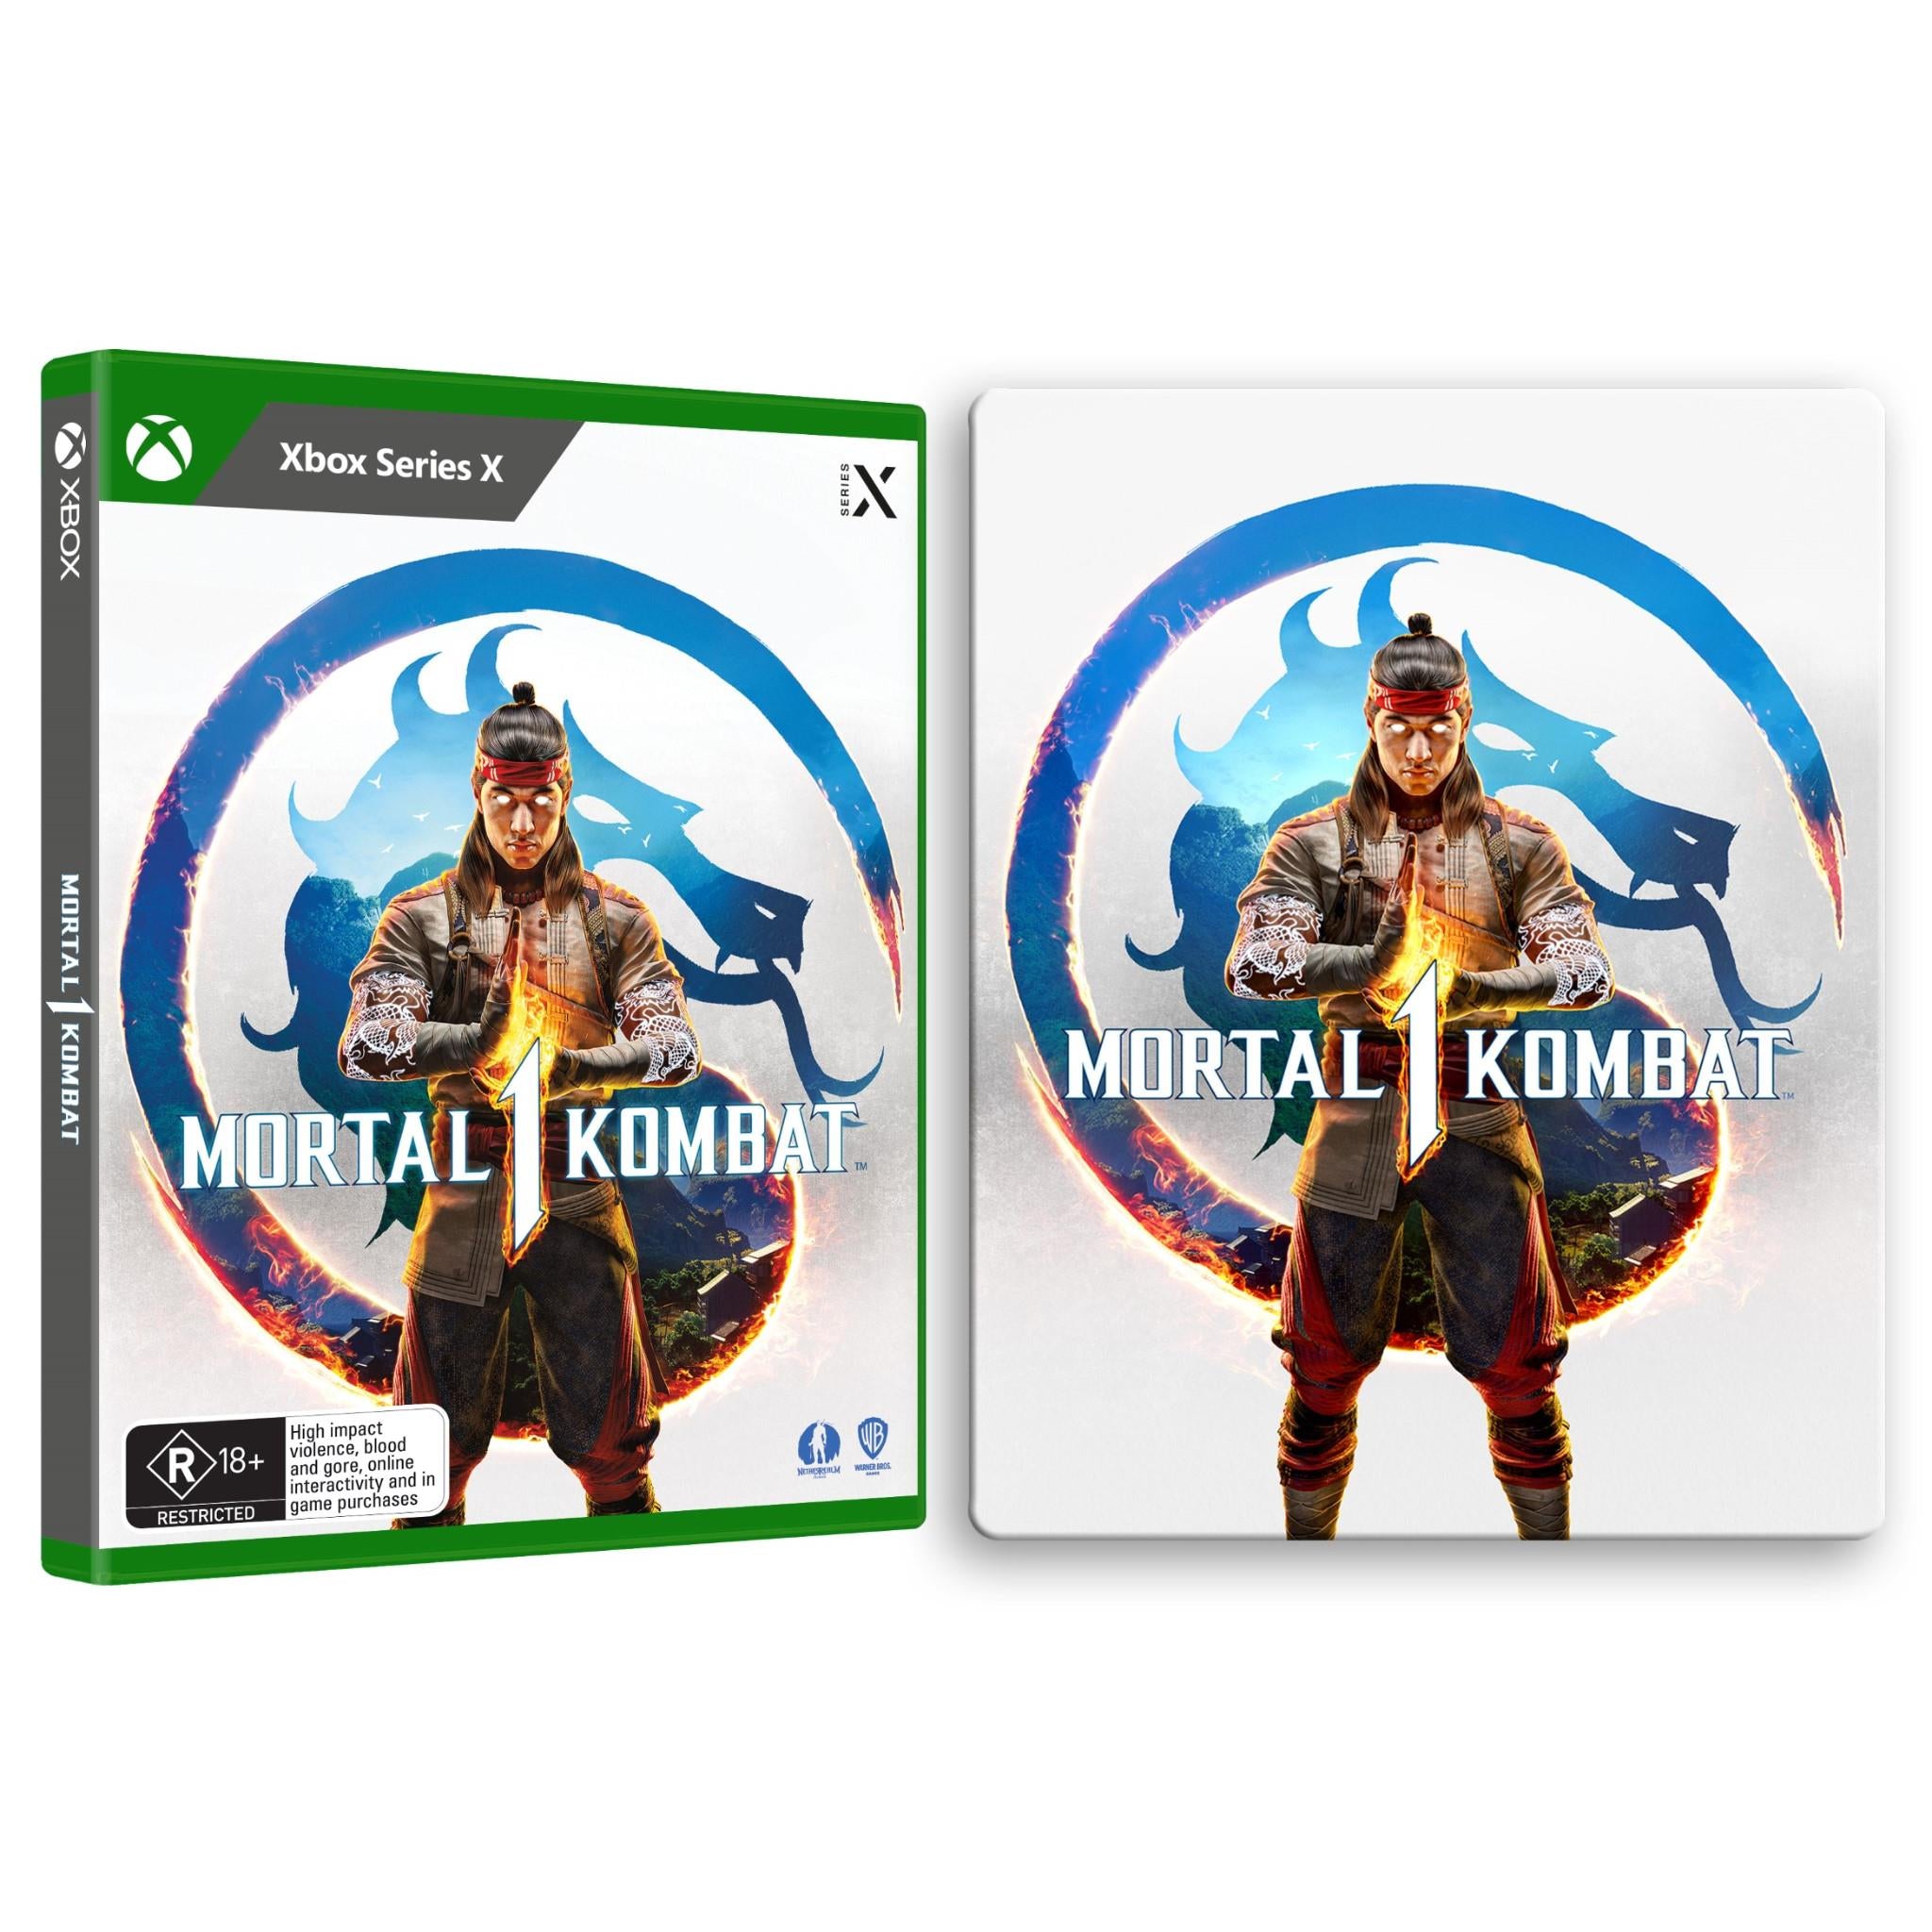 Mortal Kombat 1 (Xbox Series X) – igabiba